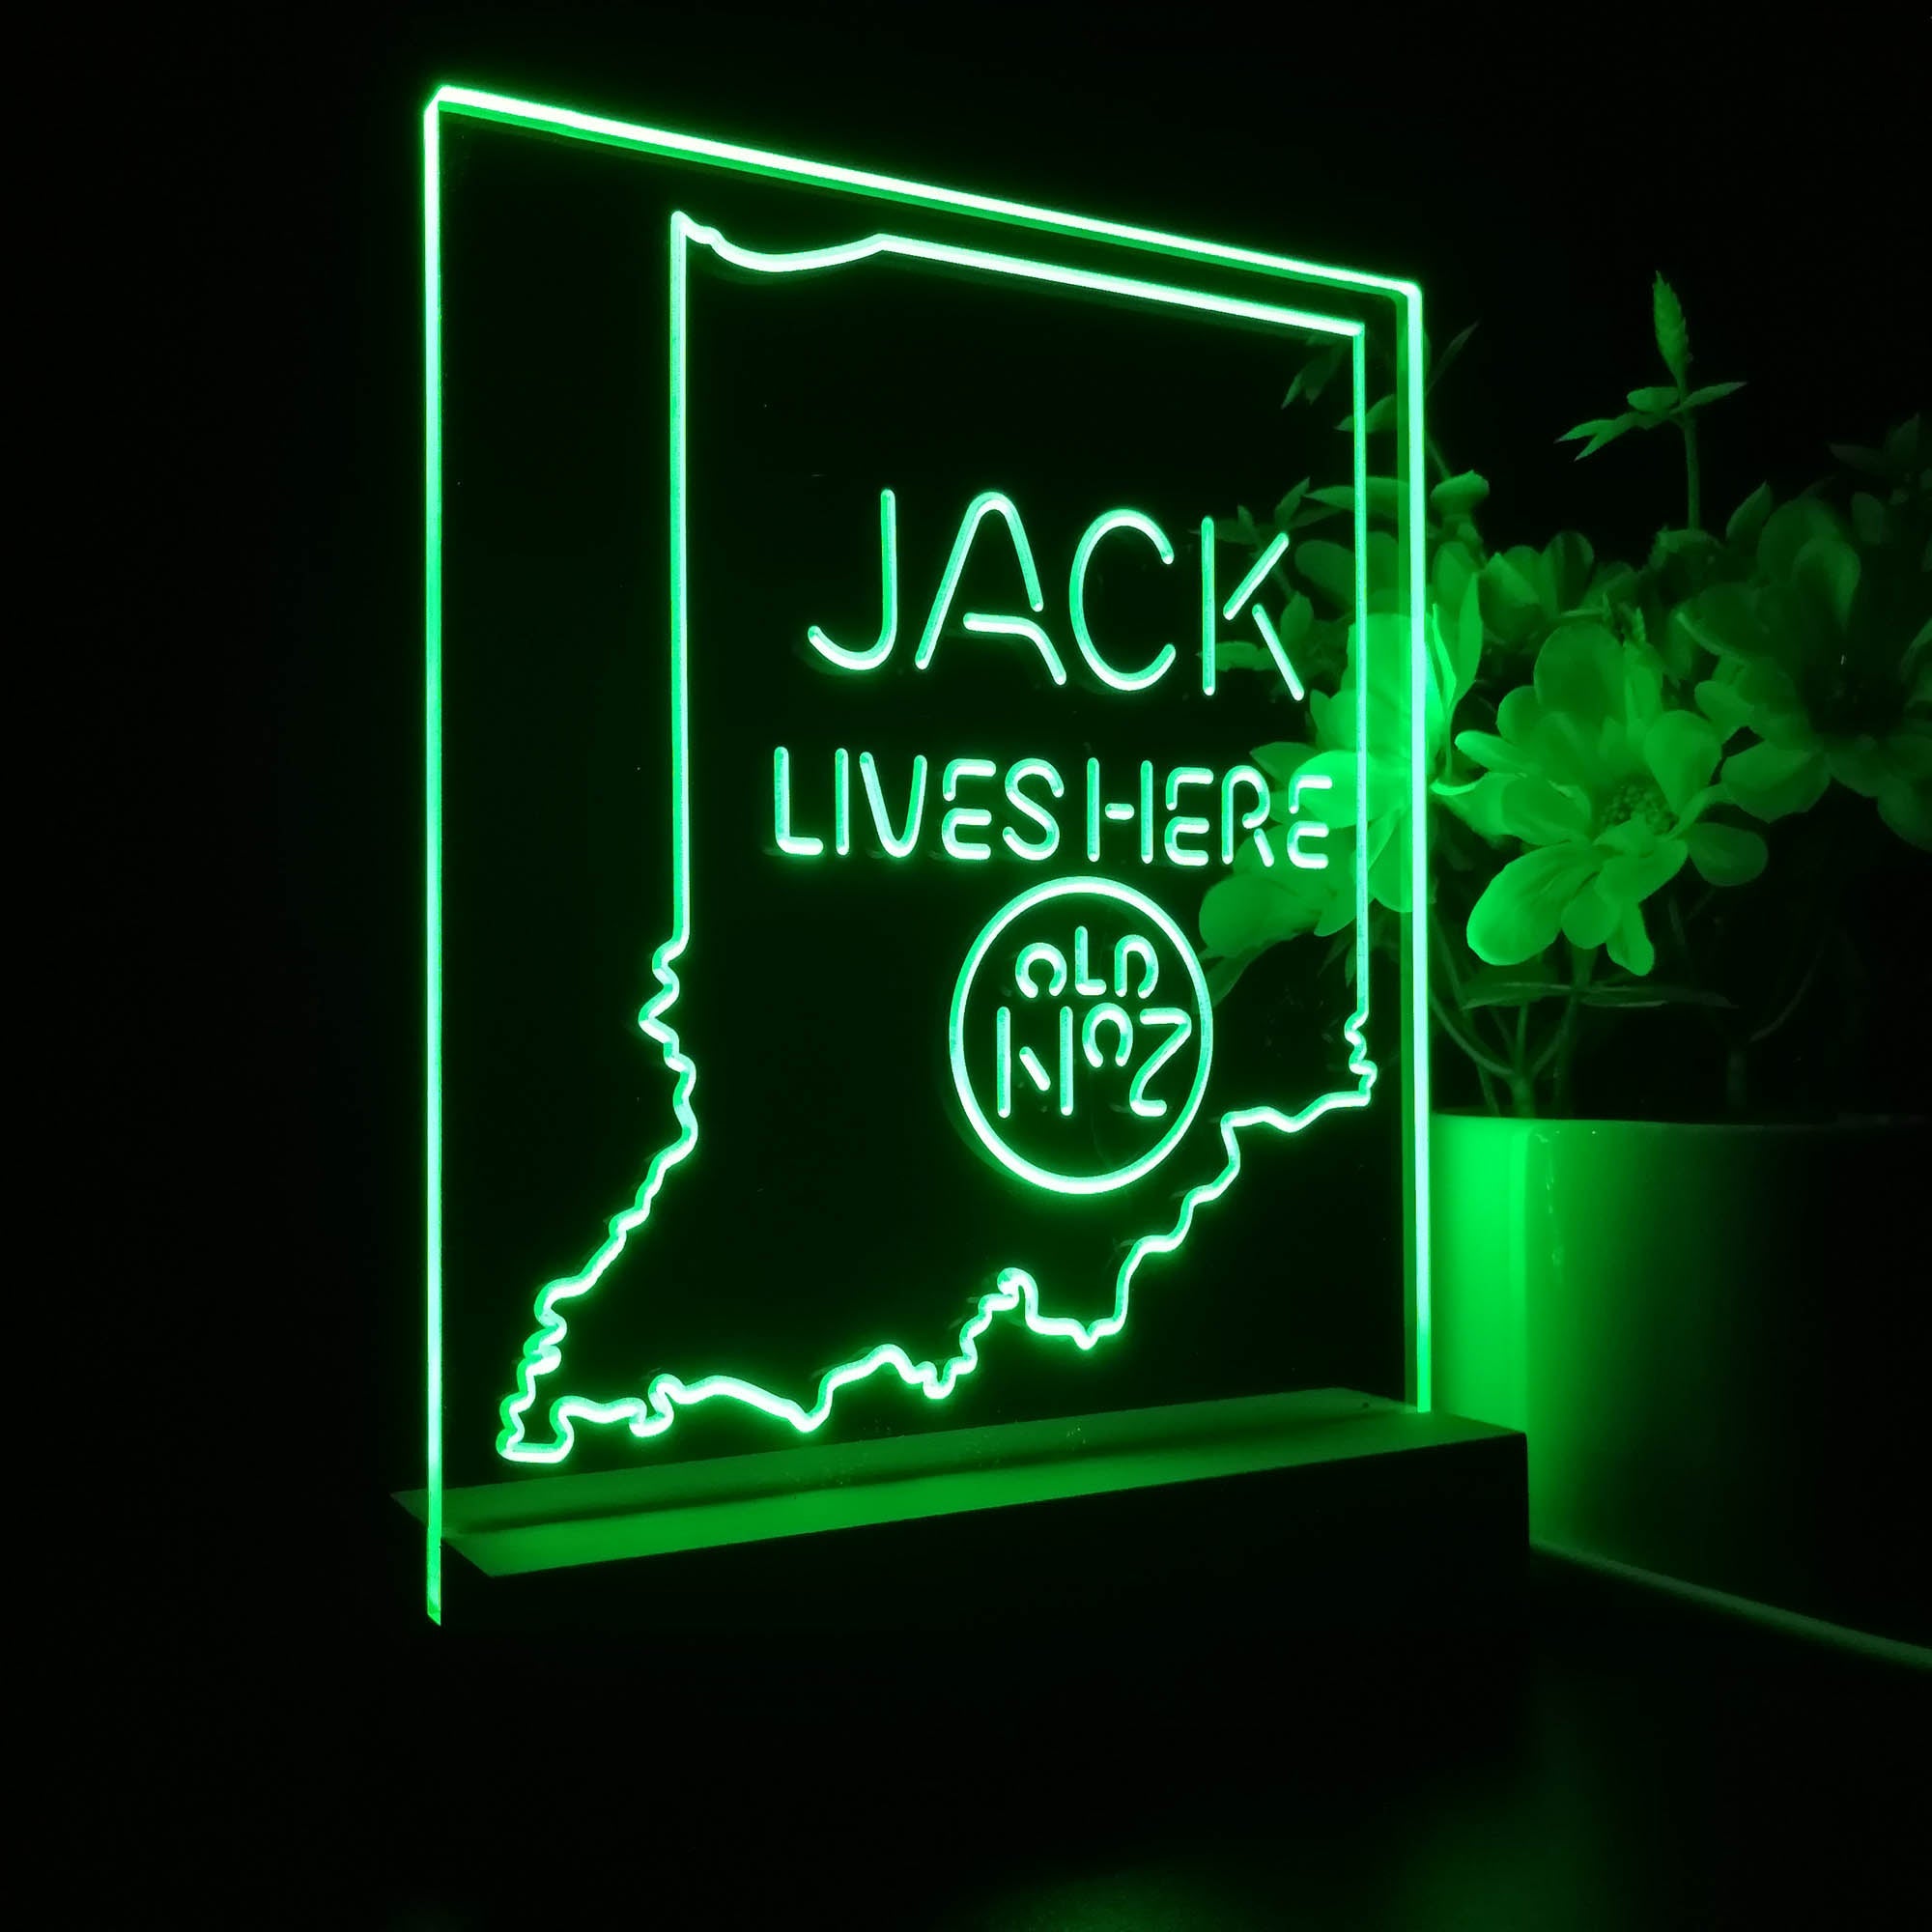 Indiana Jack Lives Here Night Light Neon Pub Bar Lamp